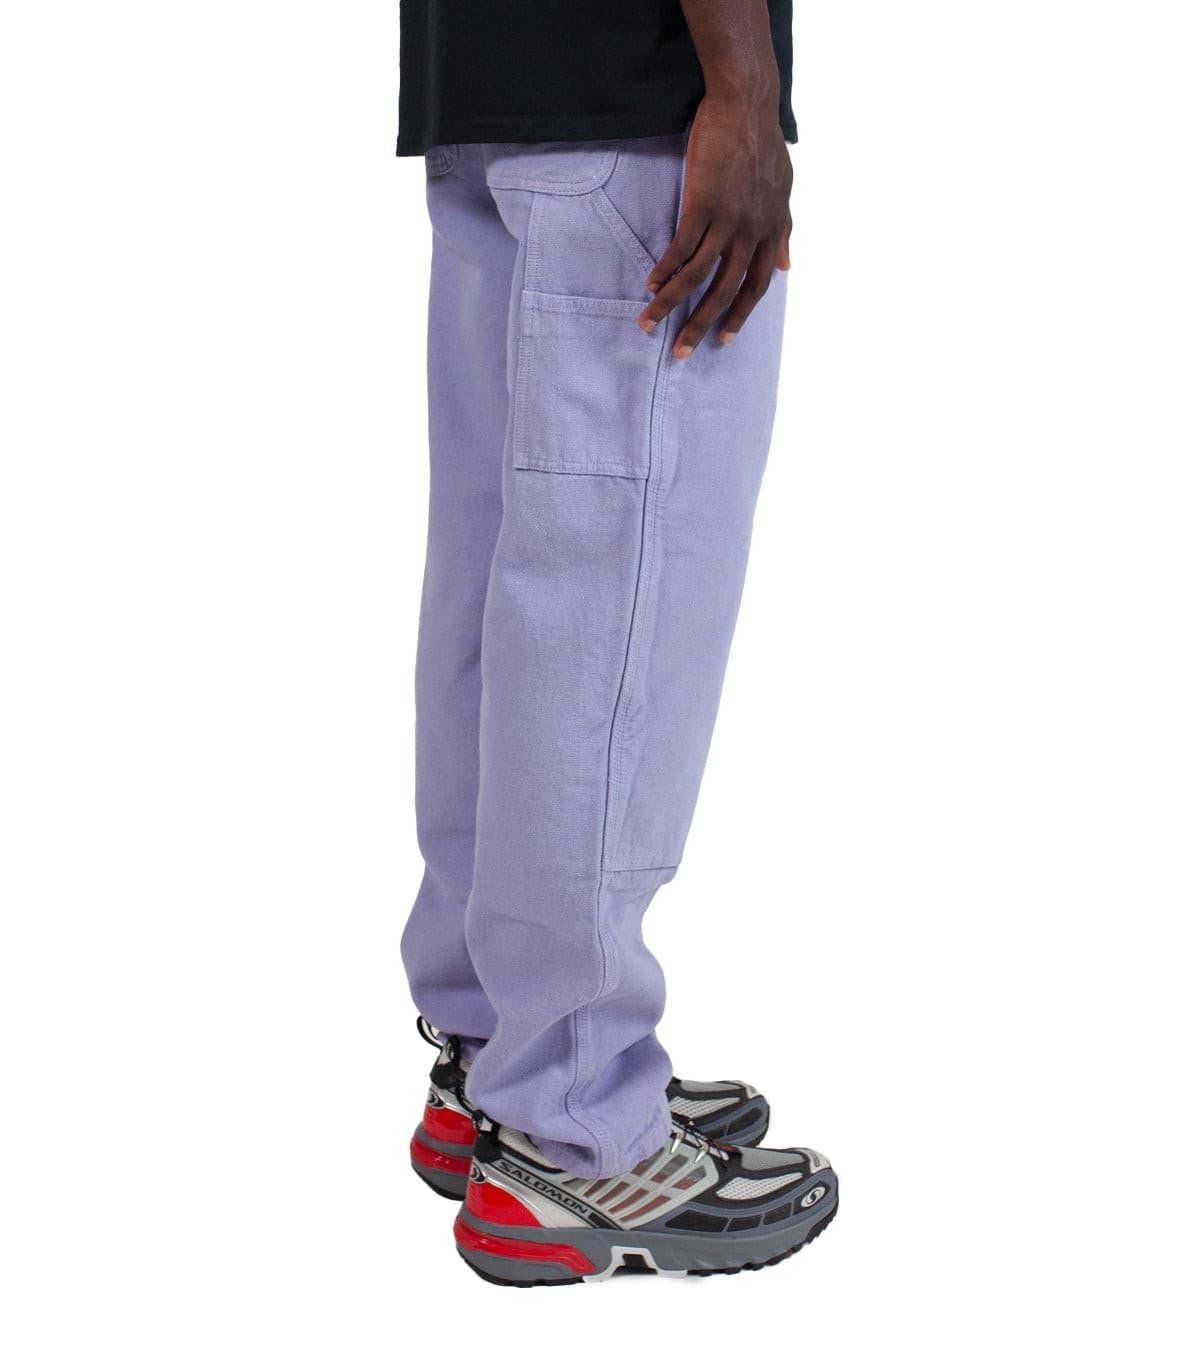 Sky High Farm Double Knee Workwear Pants Lavender | SOMEWHERE